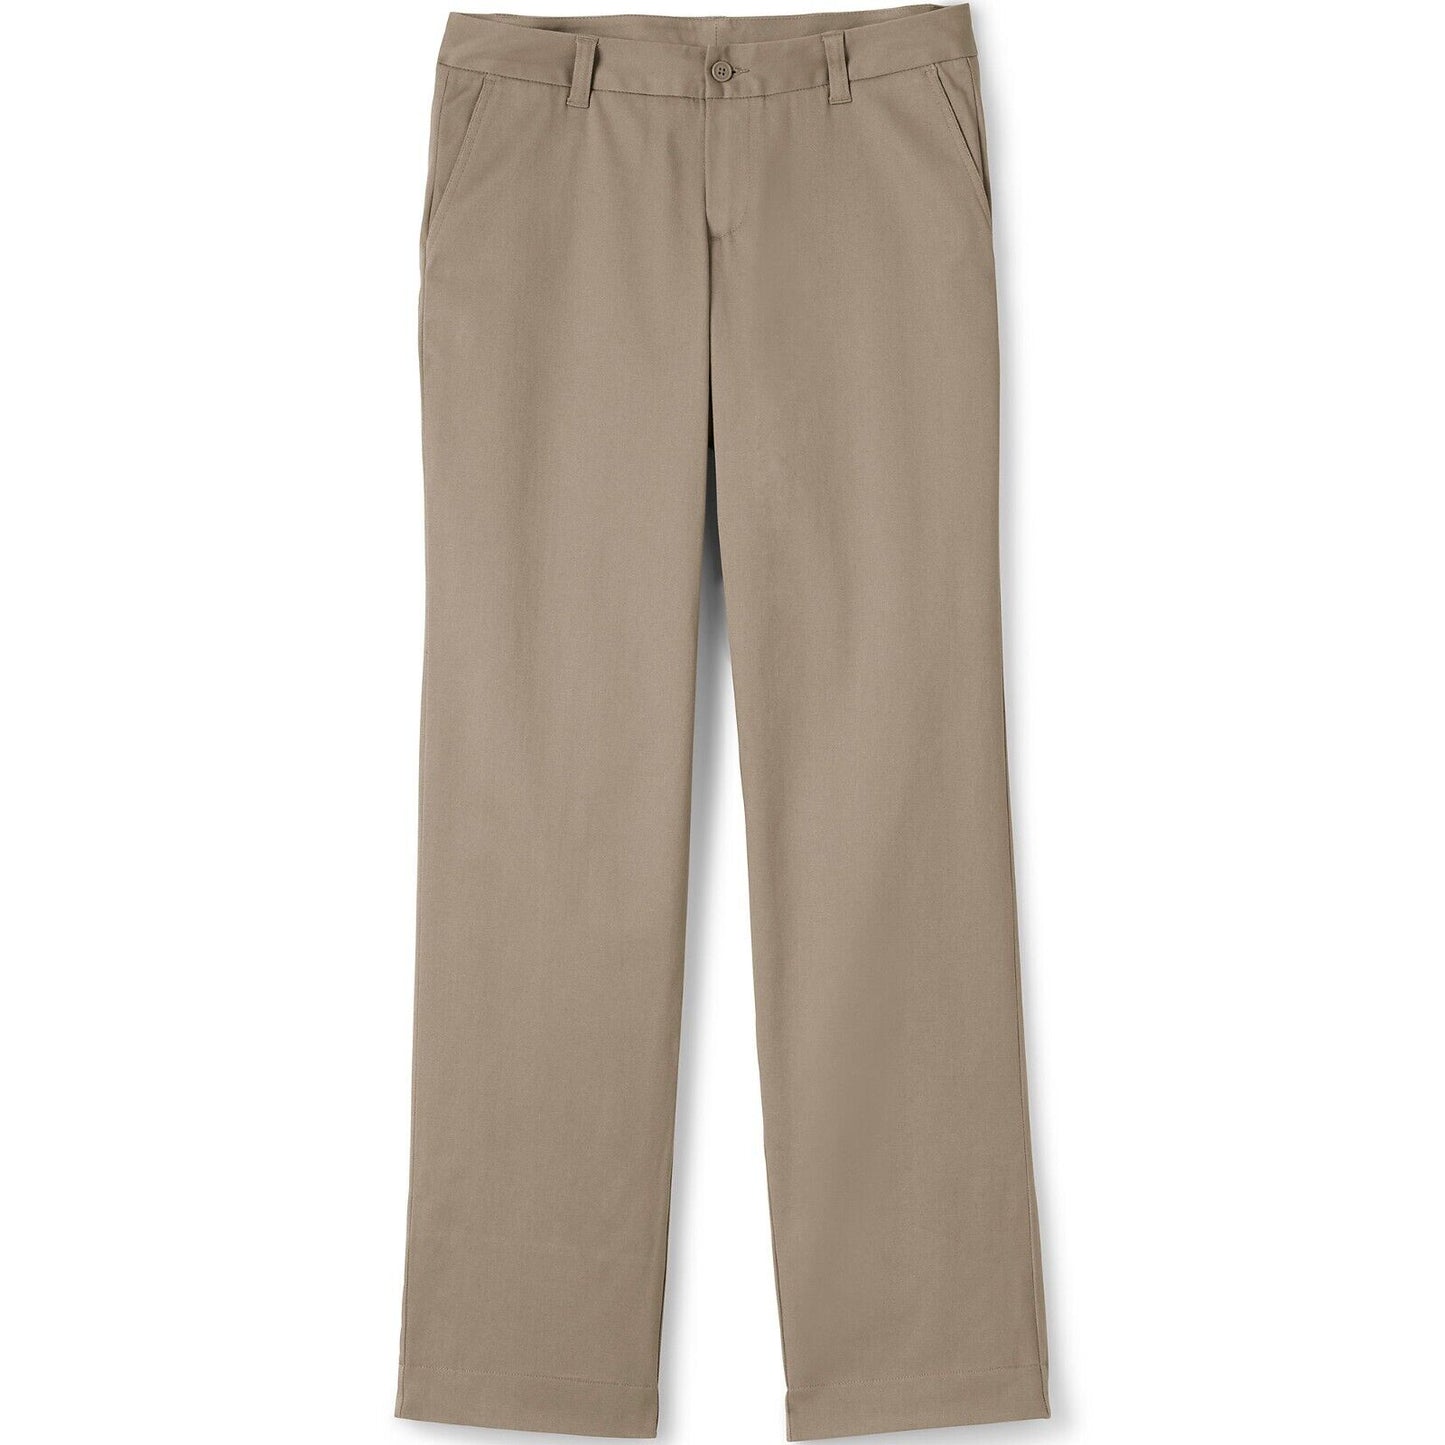 Women's Plain Front Stretch Chino Pants size 0